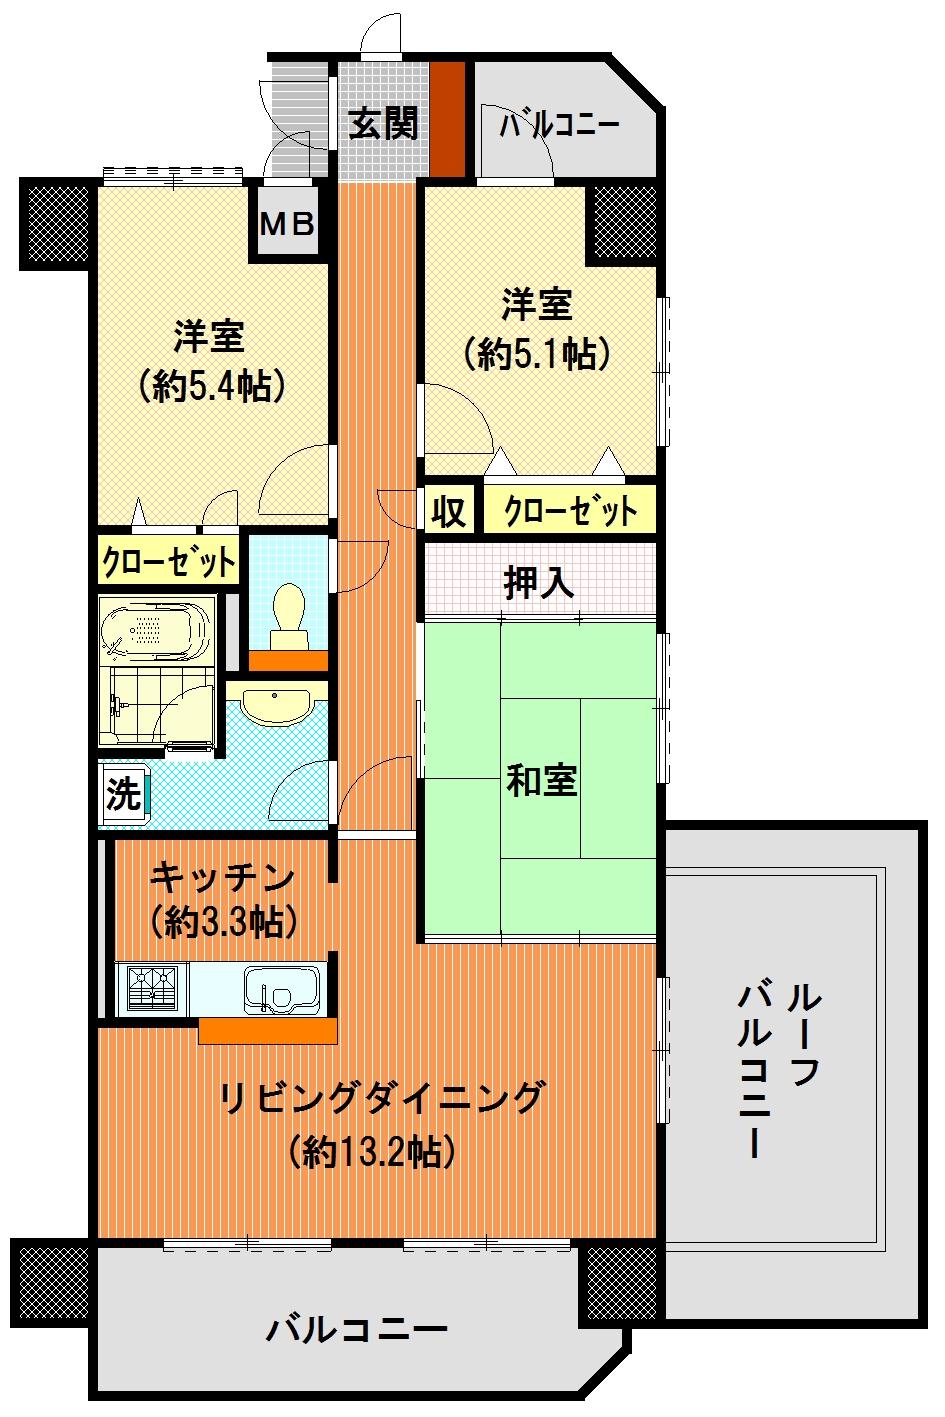 Floor plan. 3LDK, Price 13.5 million yen, Occupied area 78.42 sq m , Balcony area 14.33 sq m